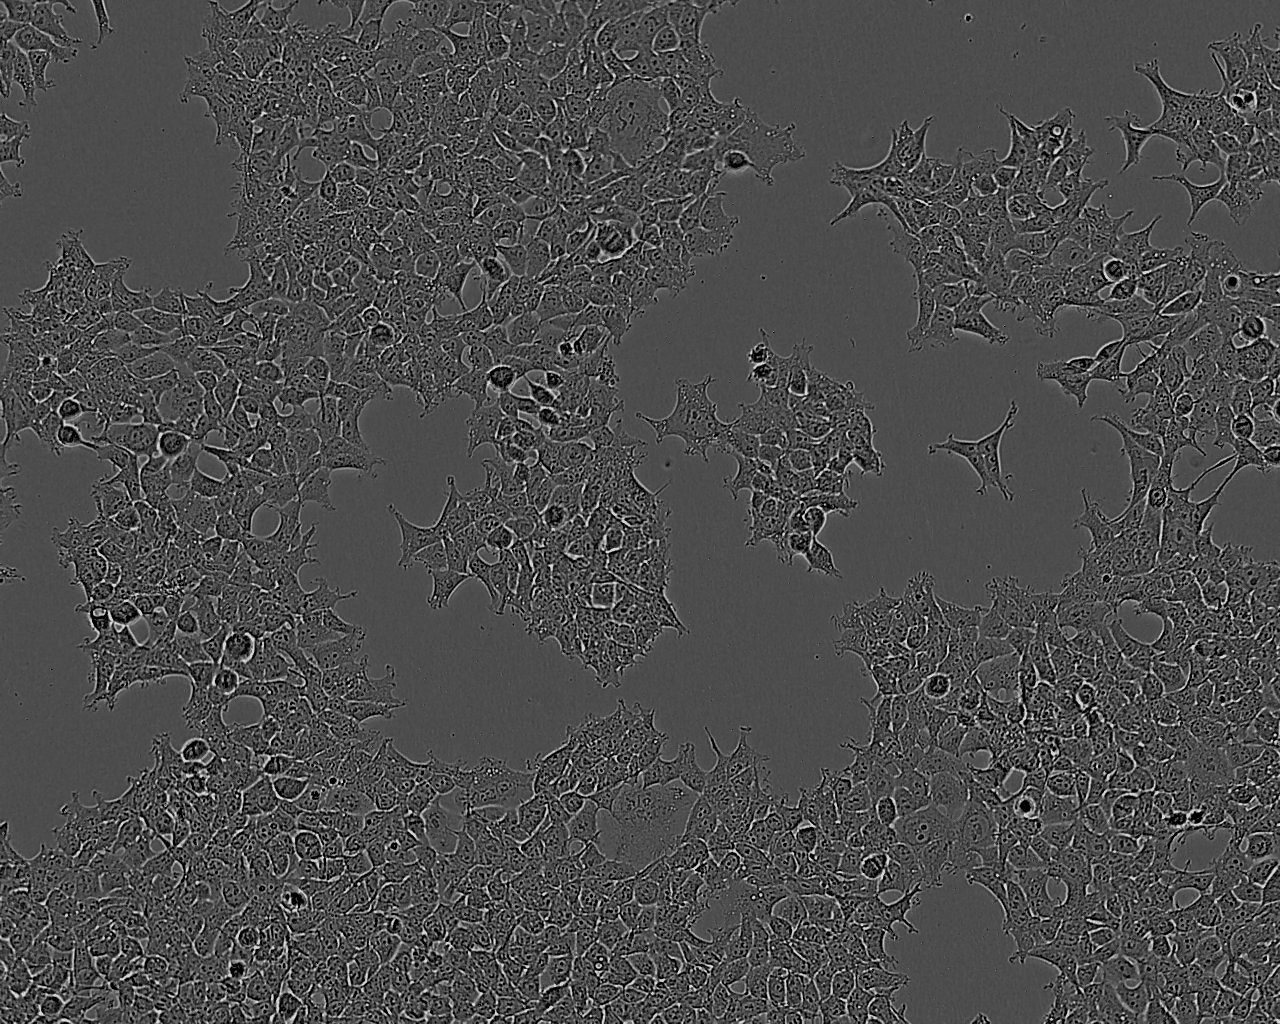 IMR-32 Cell|人神经母细胞瘤细胞